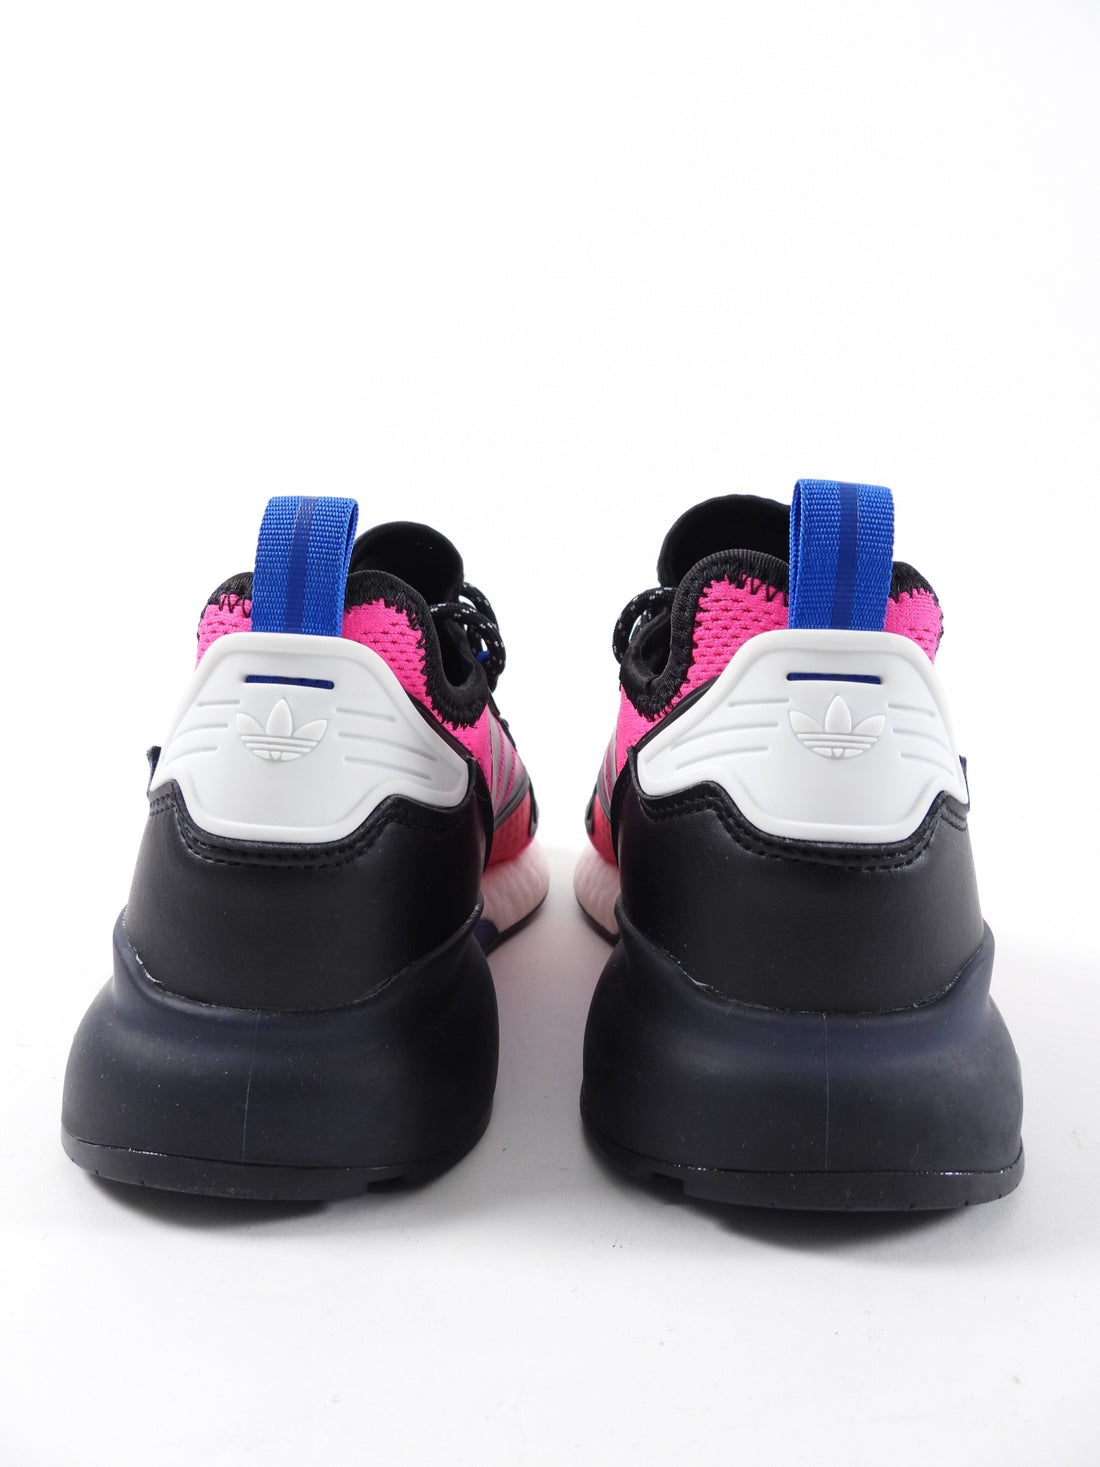 Adidas Neon Pink, Navy, Black Sneakers - USA 7.5